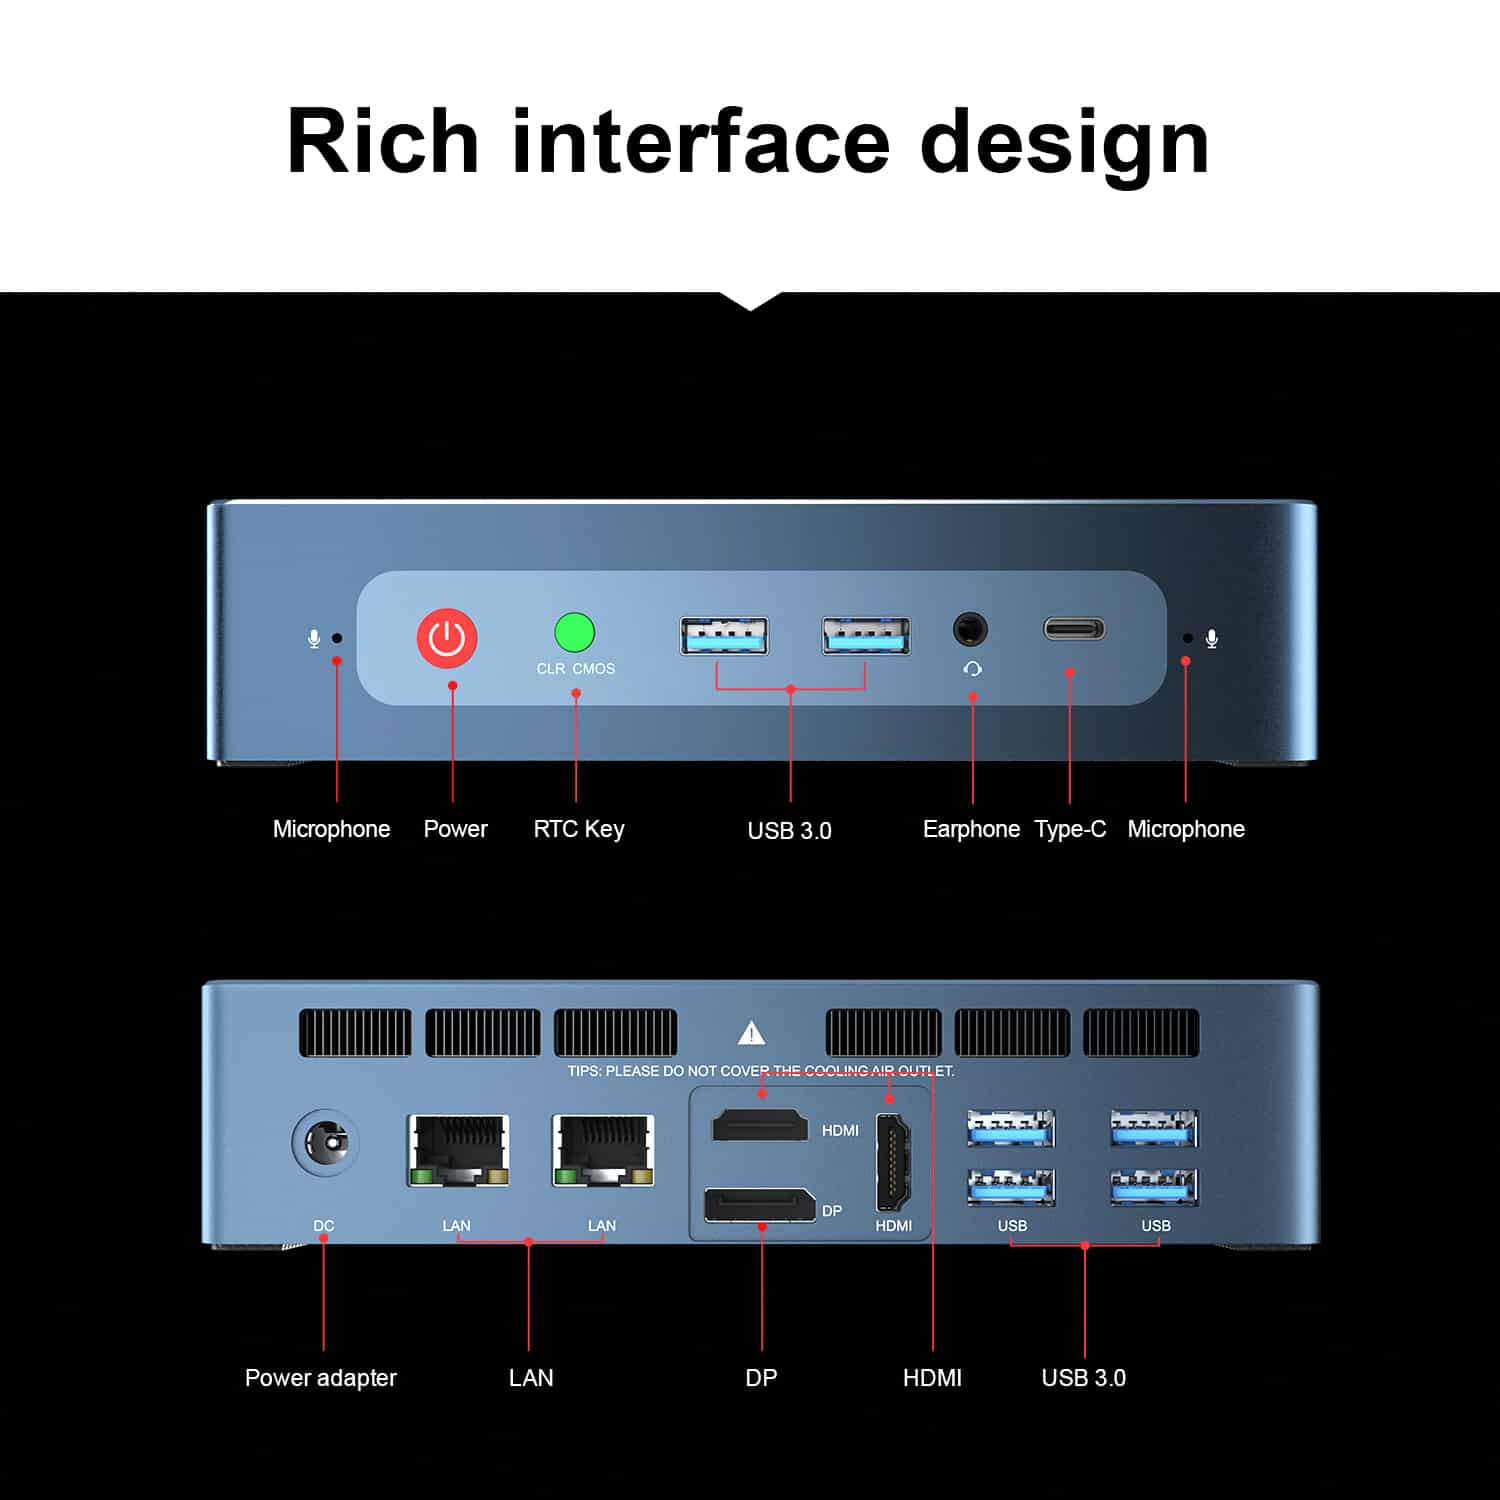 Beelink GTR-7 rich interface design